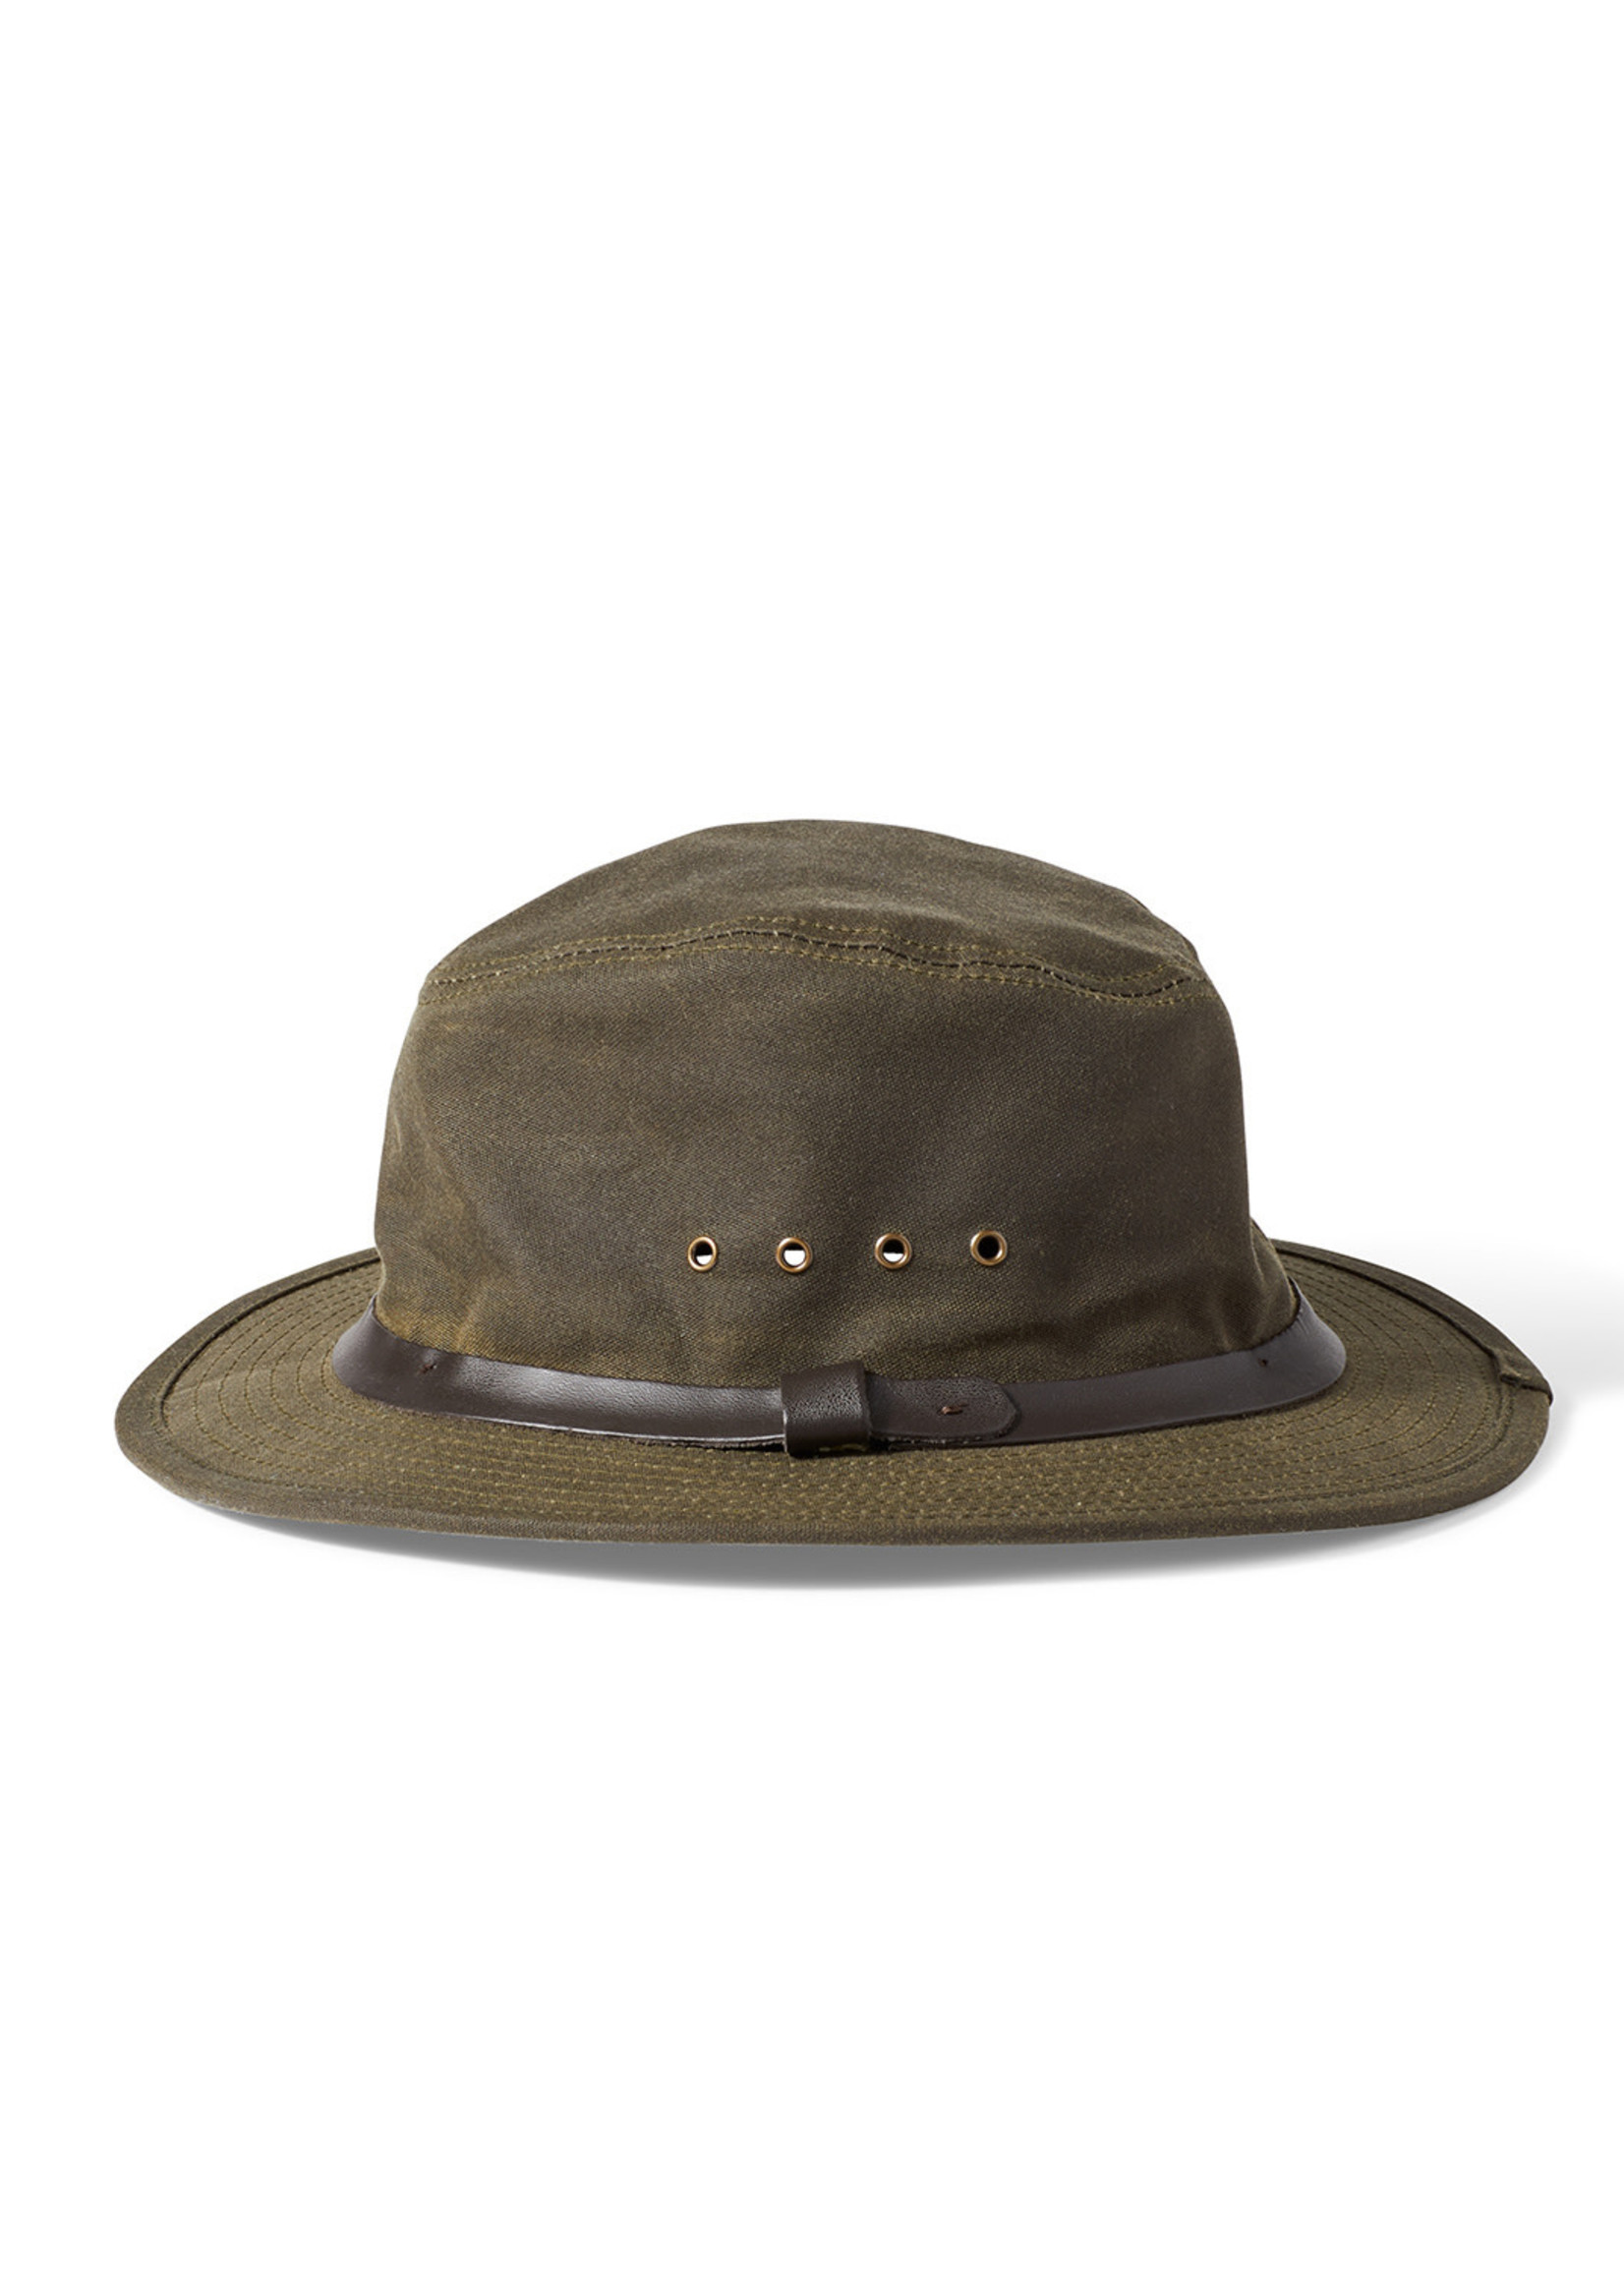 Filson Tin Packer Hat: OtterGreen